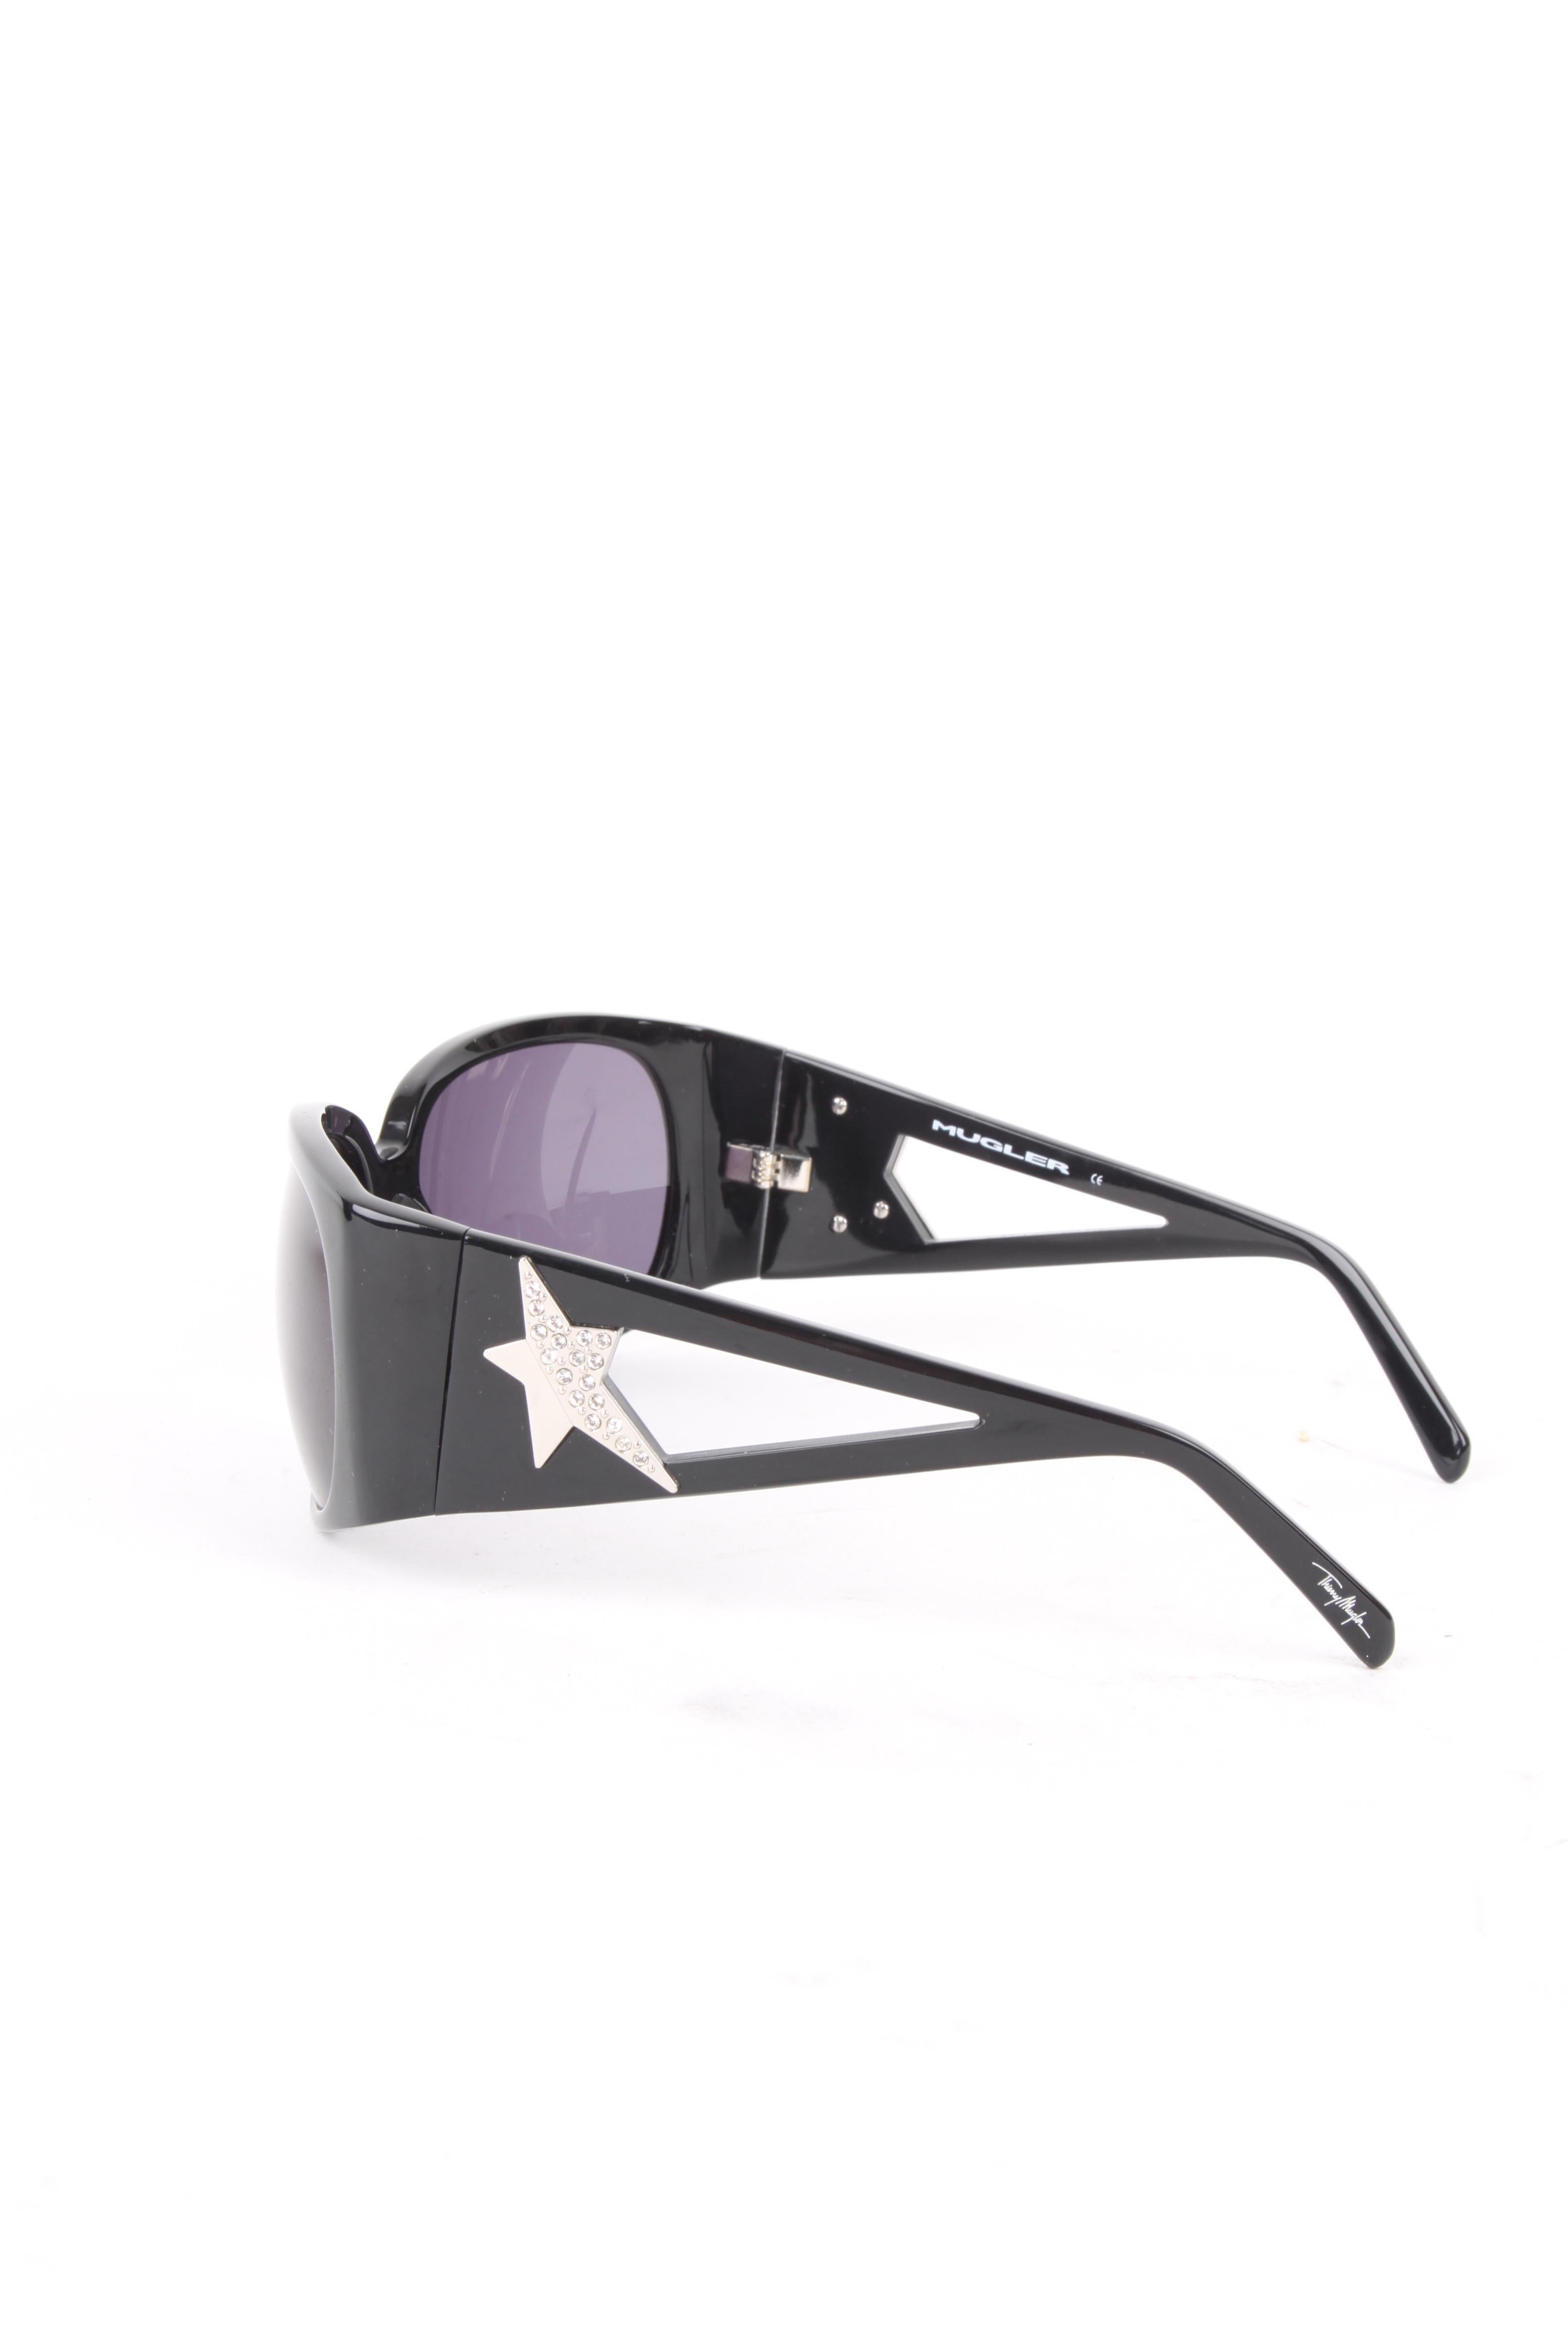 Thierry Mugler Black Lucite Star Swarovski Rhinestone Embellished Sunglasses For Sale 1